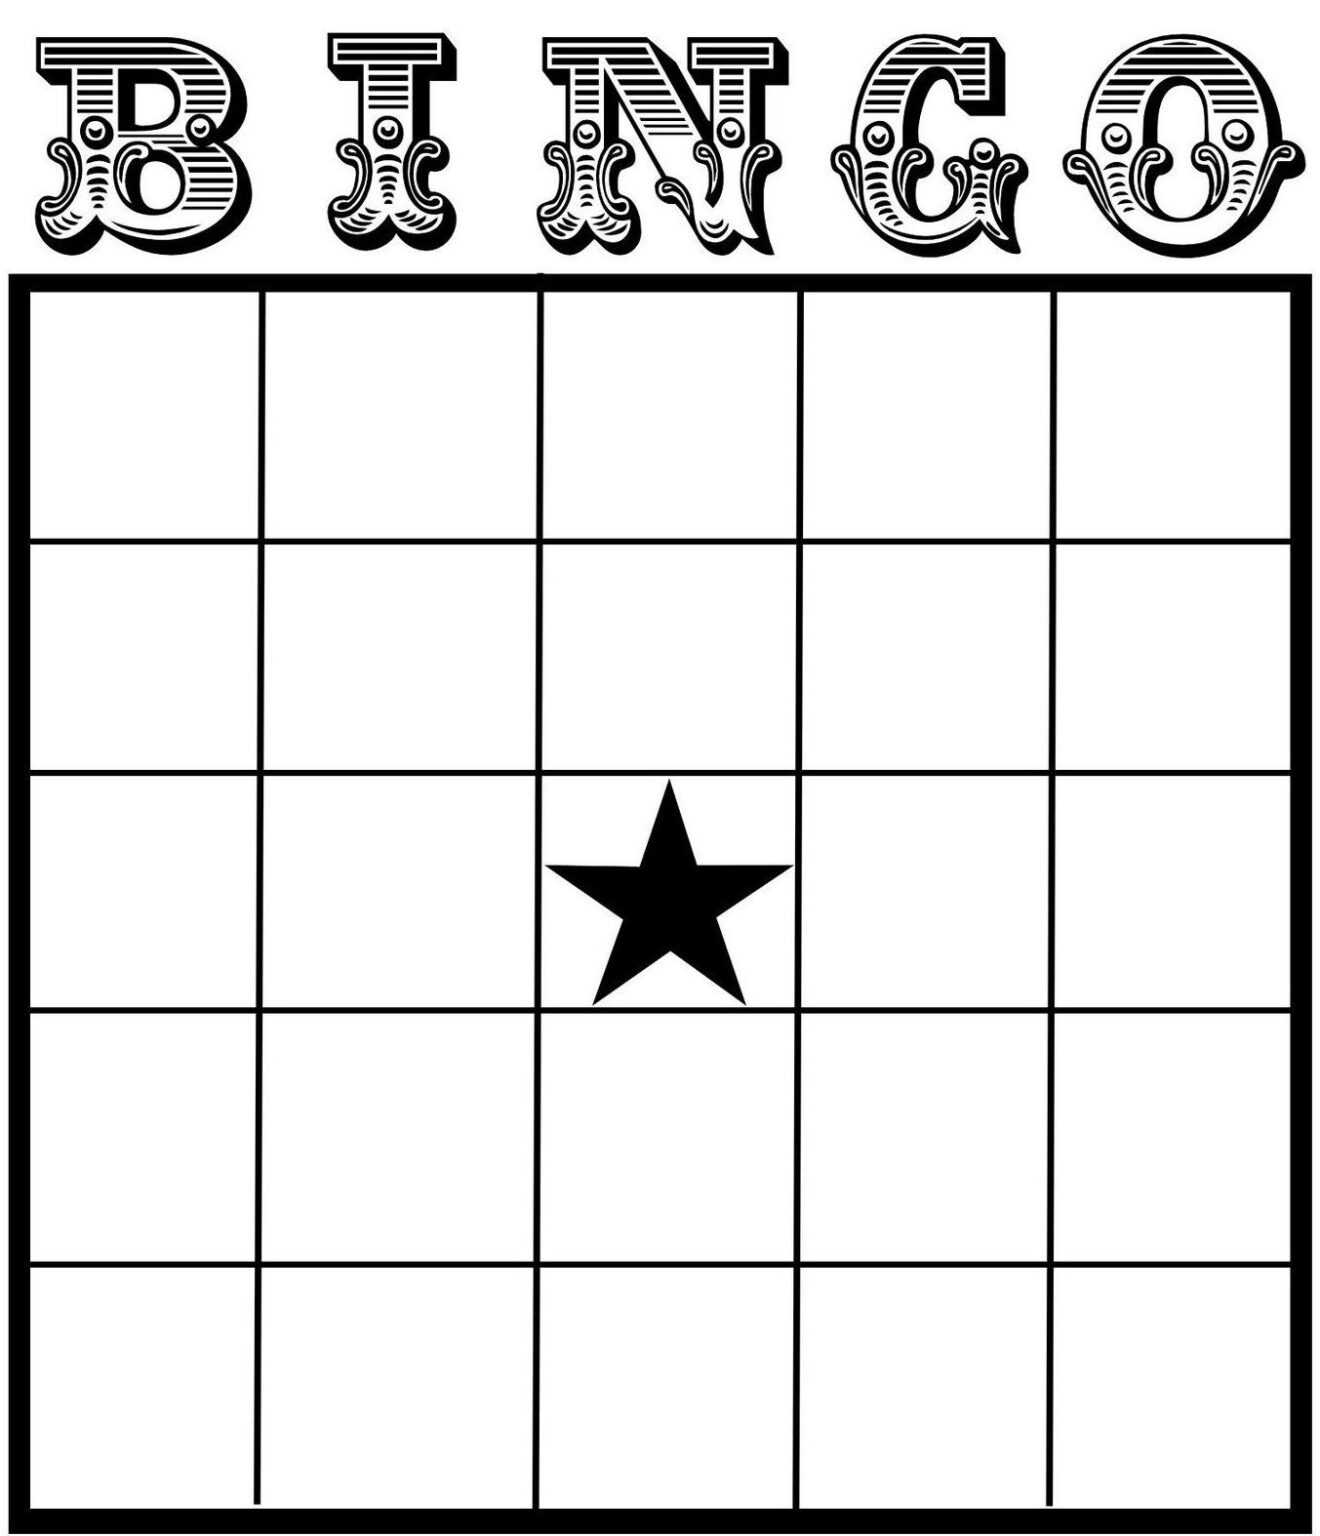 free-printable-bingo-calling-numbers-printable-templates